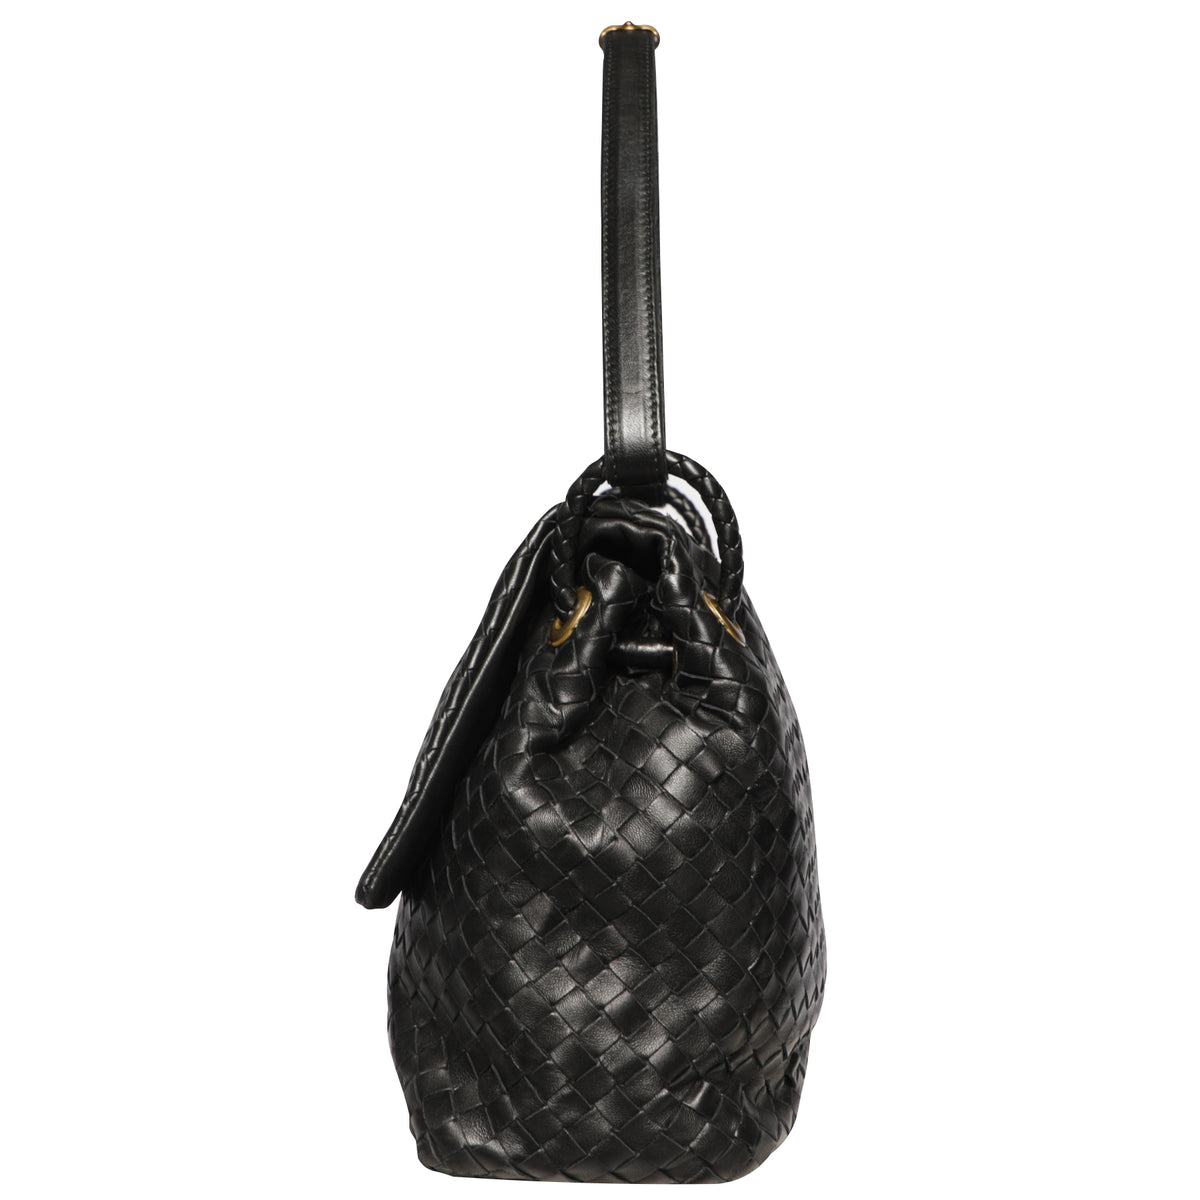 Bottega Veneta Woven Leather Intrecciato Shoulder Bag - Black